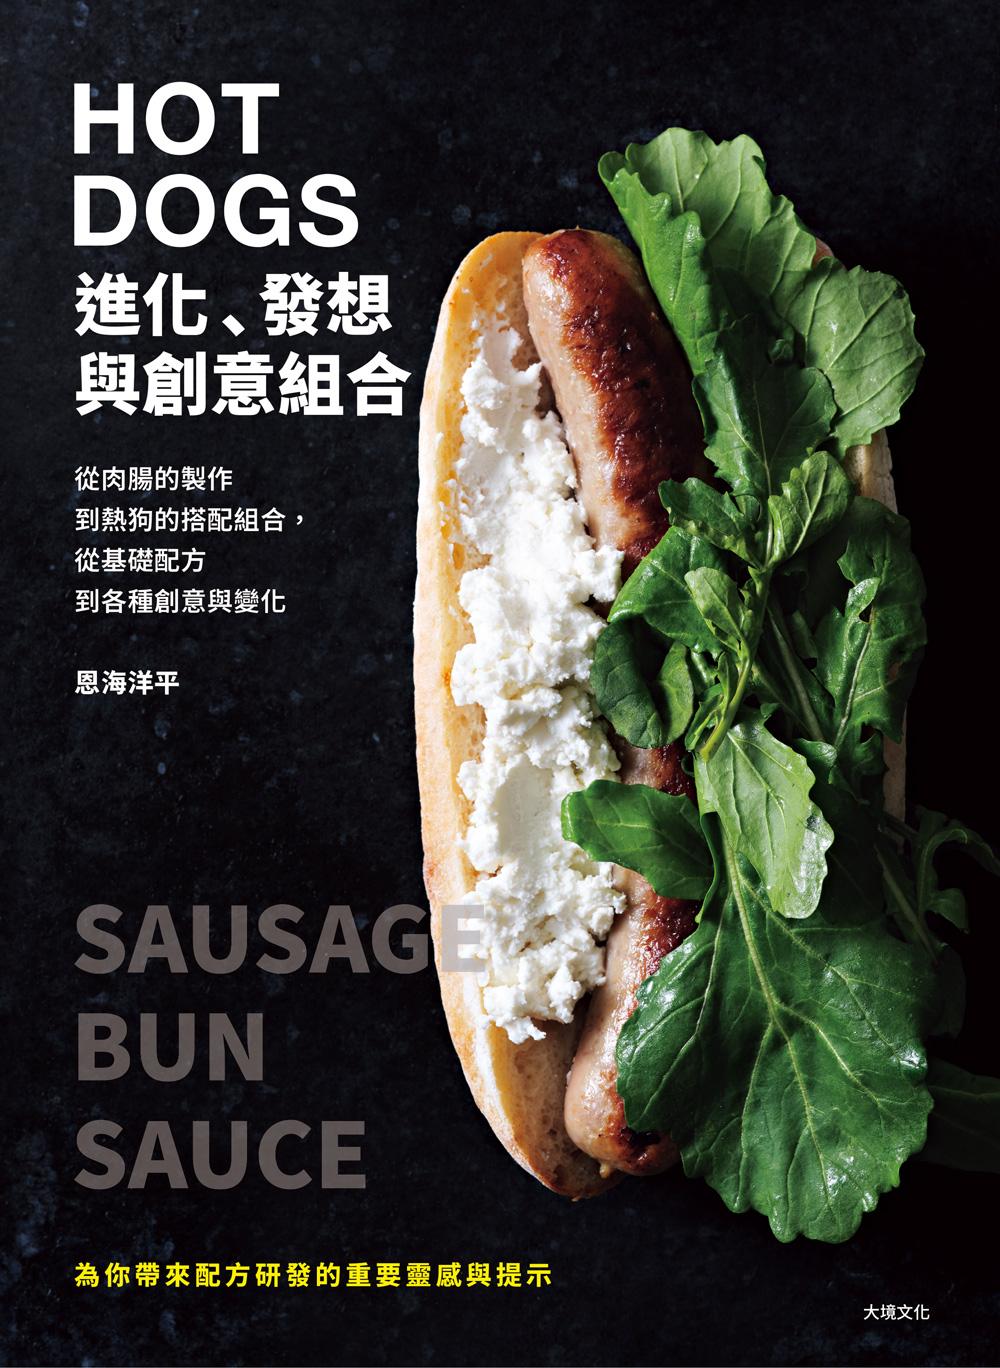 HOT DOGS的進化、發想與創意組合：榮獲日本IFFA金獎!肉腸製作、商品化策略、食材的原創變化，初學者與專業廚師都不能錯過! 